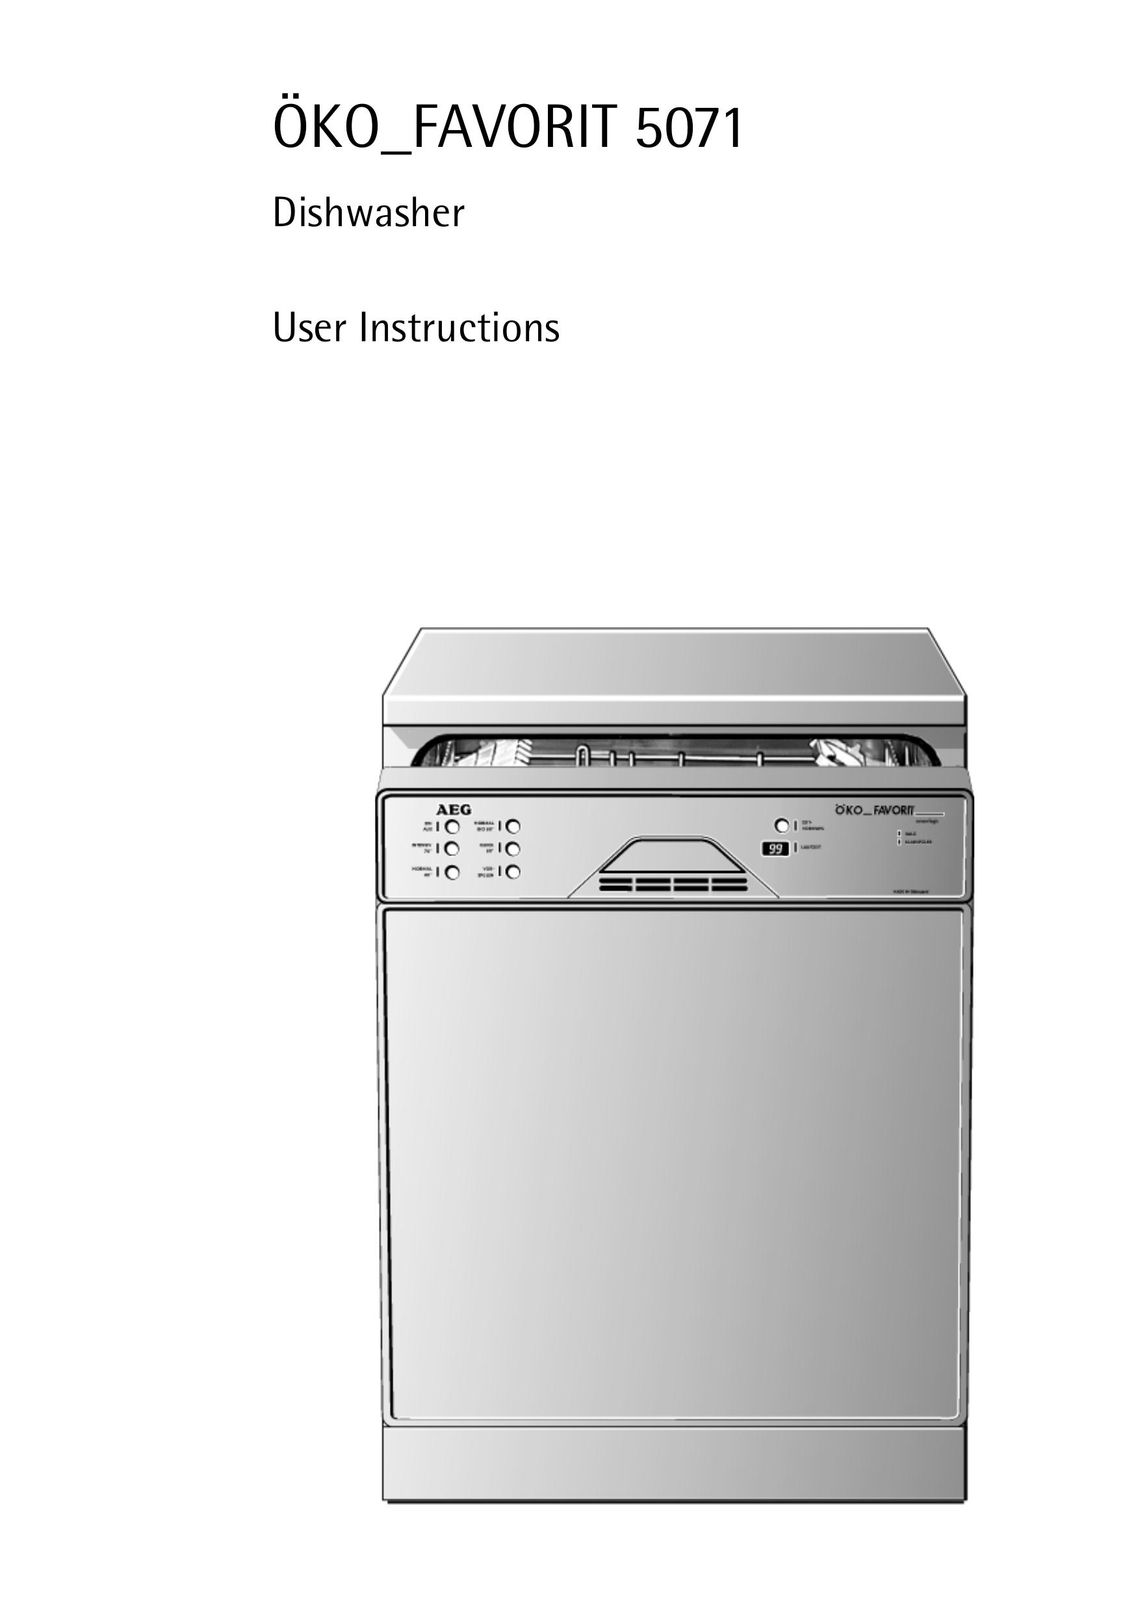 AEG 5071 Dishwasher User Manual